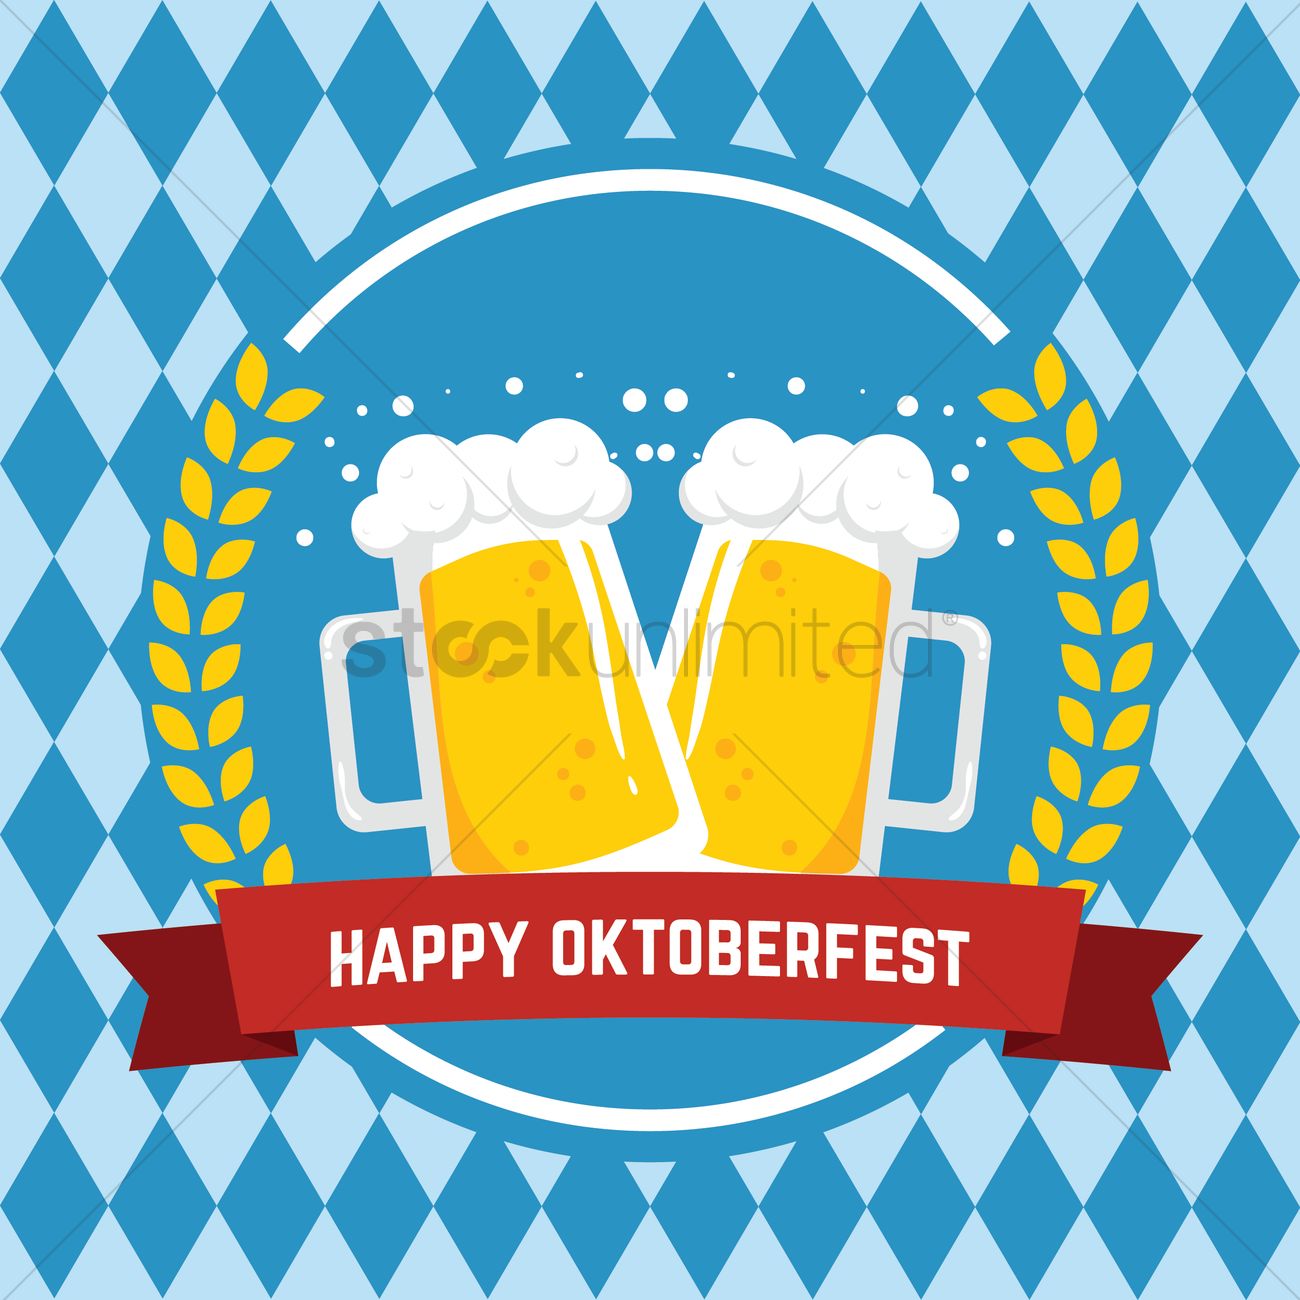 Happy Oktoberfest Two Beer Mugs Illustration